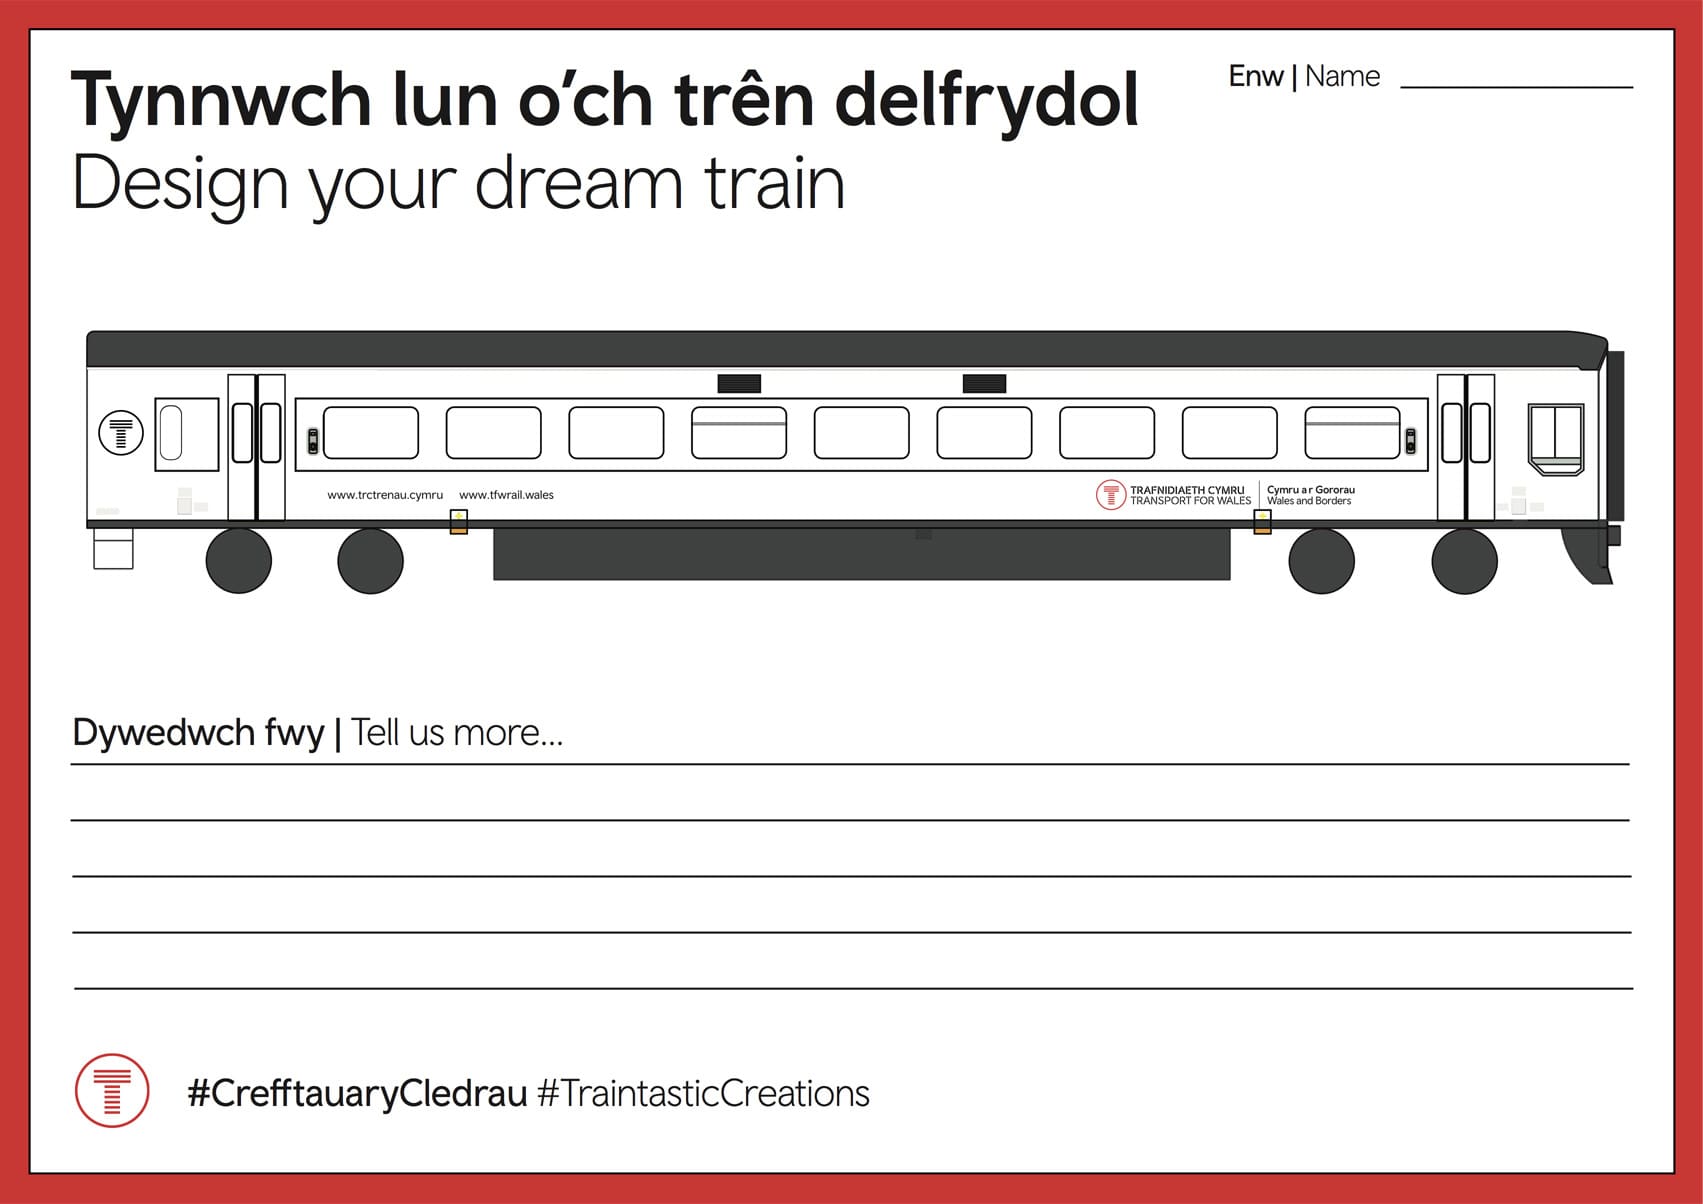 Design your own dream train - click to open as PDF